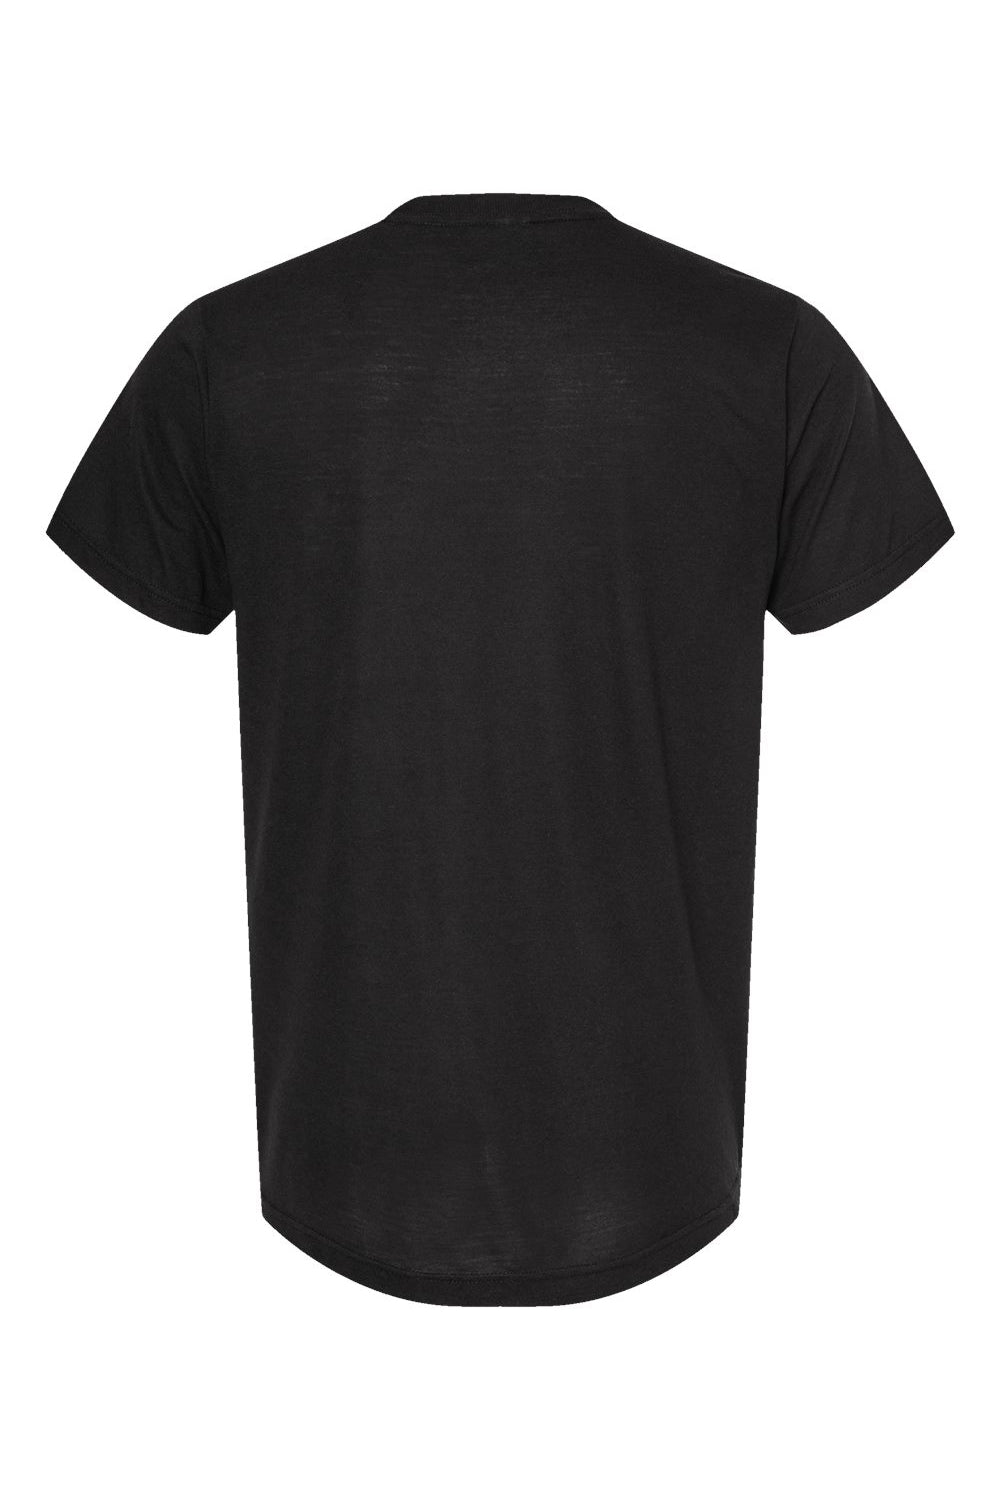 Tultex 254 Mens Short Sleeve Crewneck T-Shirt Black Flat Back